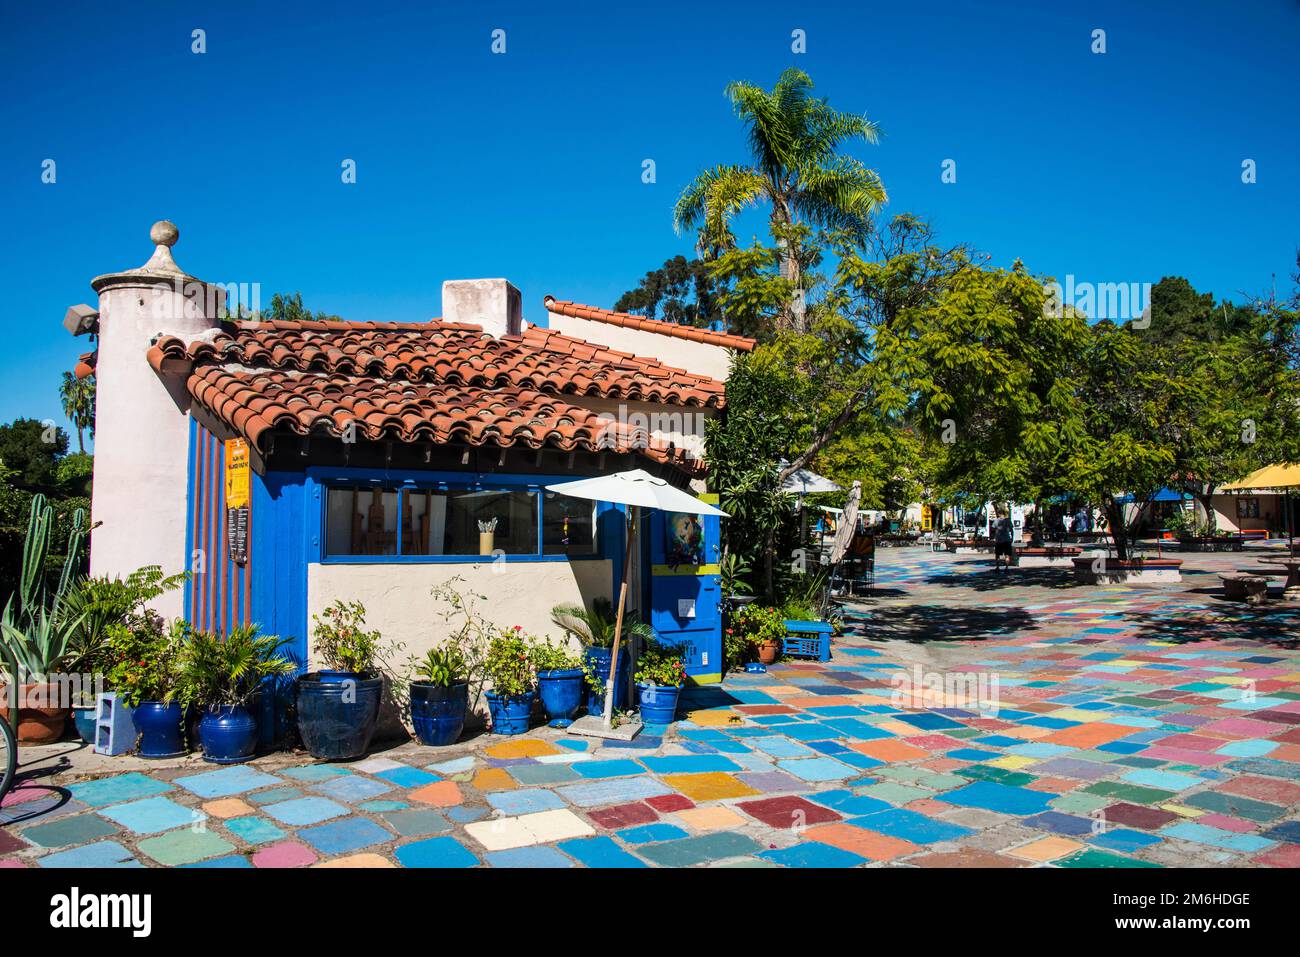 Spanish architecture, Balboa Park, San Diego, California, USA Stock Photo